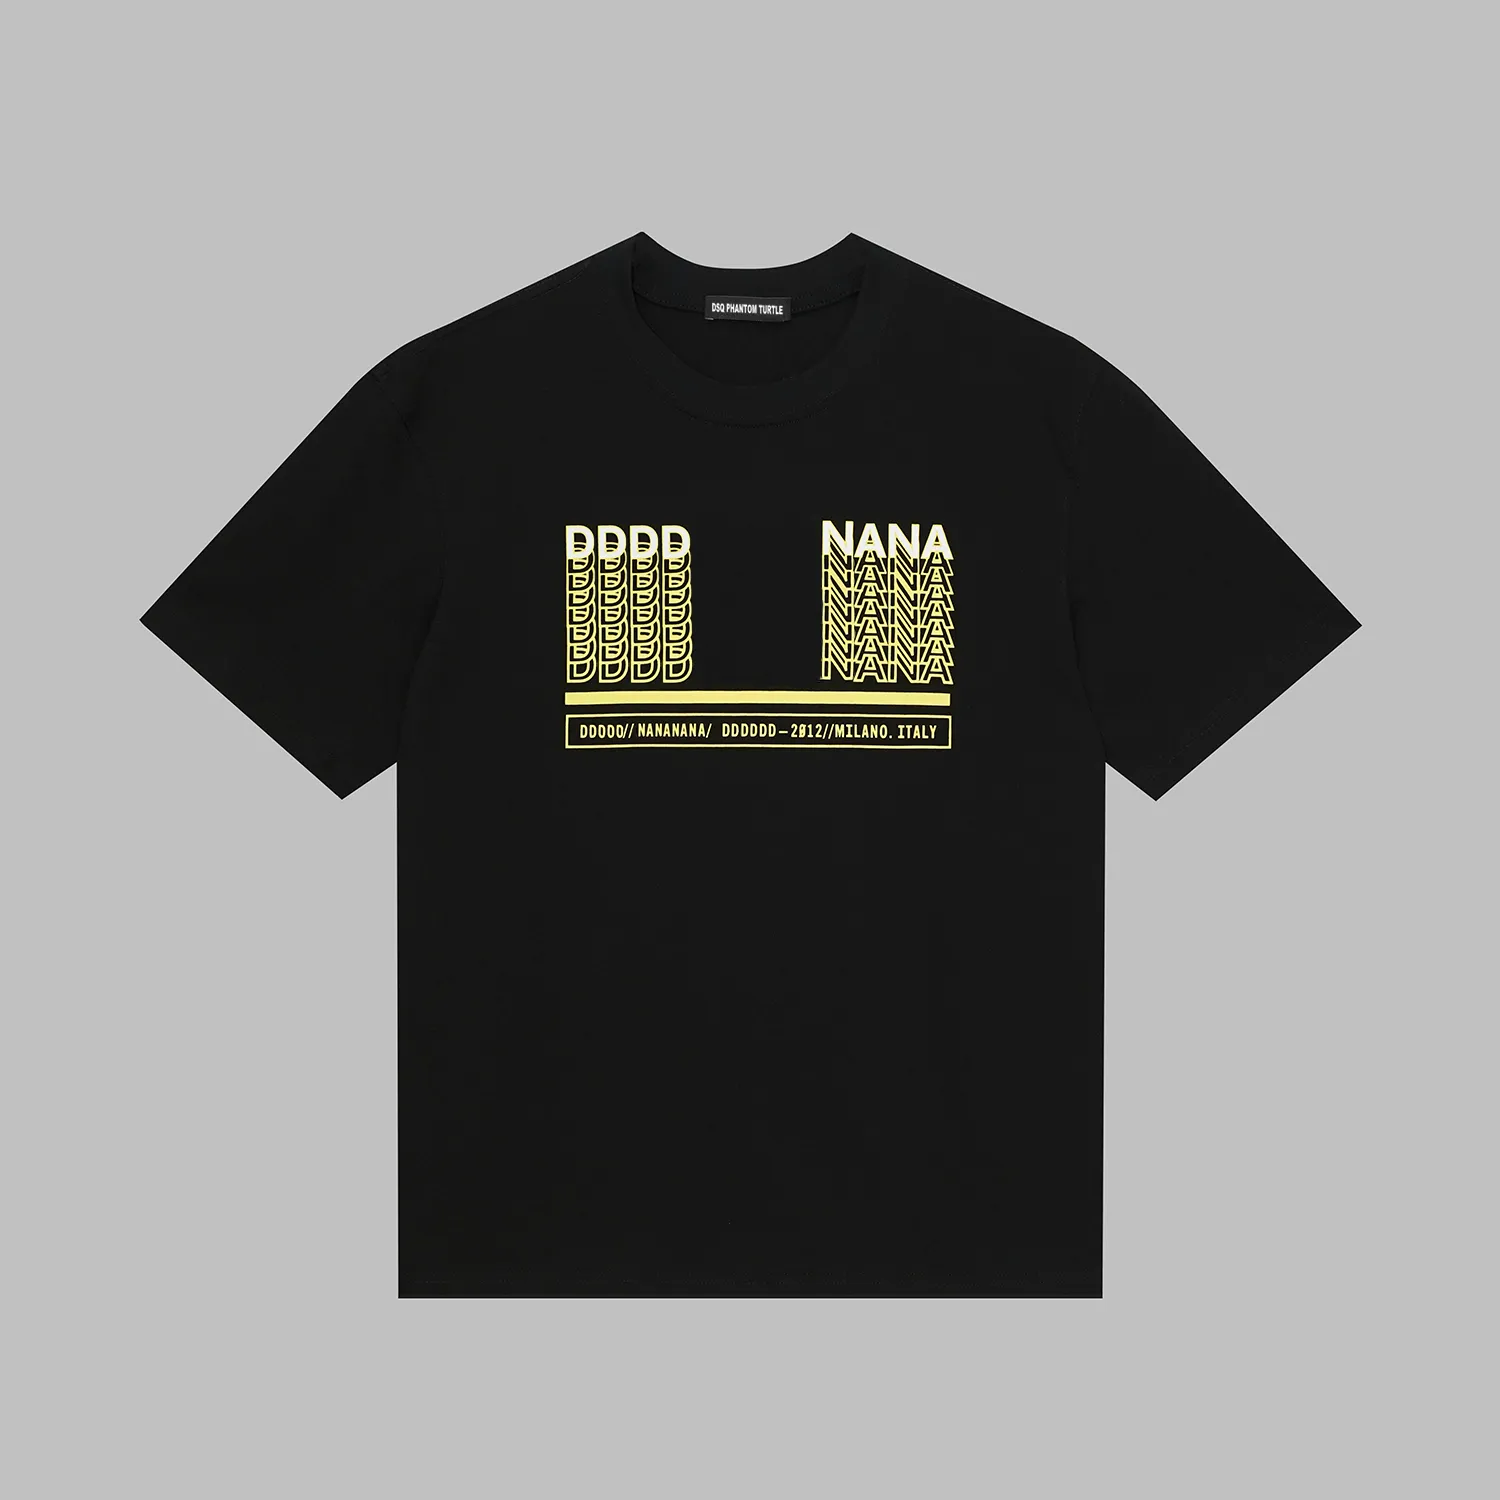 DSQ PHANTOM TURTLE T-shirt da uomo firmata Milano T-shirt con stampa logo moda italiana T-shirt estiva nera bianca Hip Hop Streetwear 100% cotone Top Taglie forti 51585